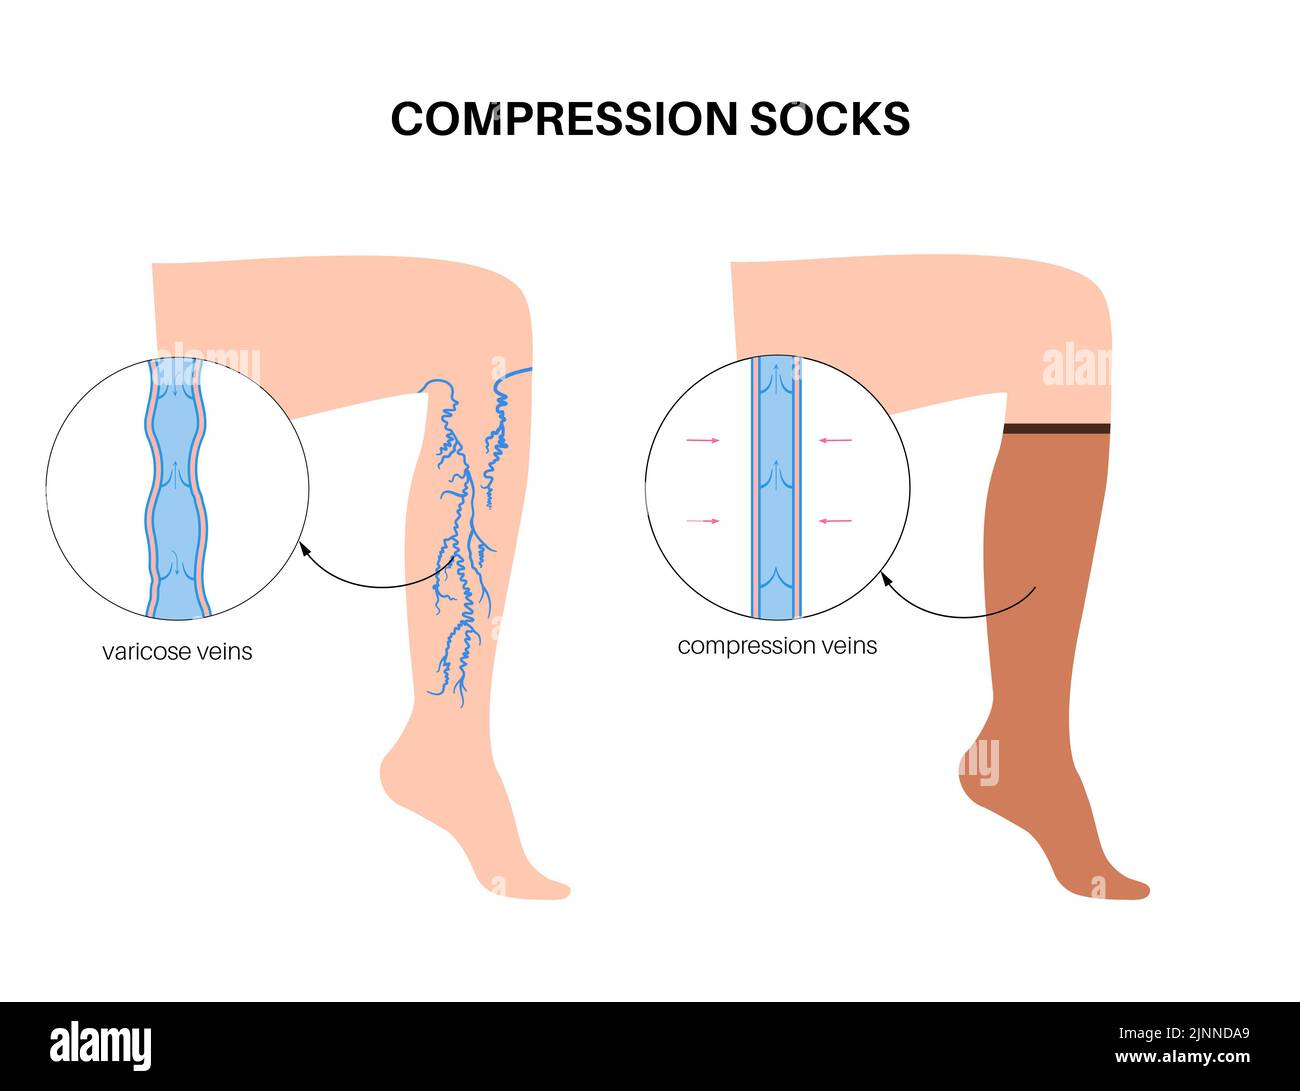 Compression socks for varicose veins, illustration Stock Photo